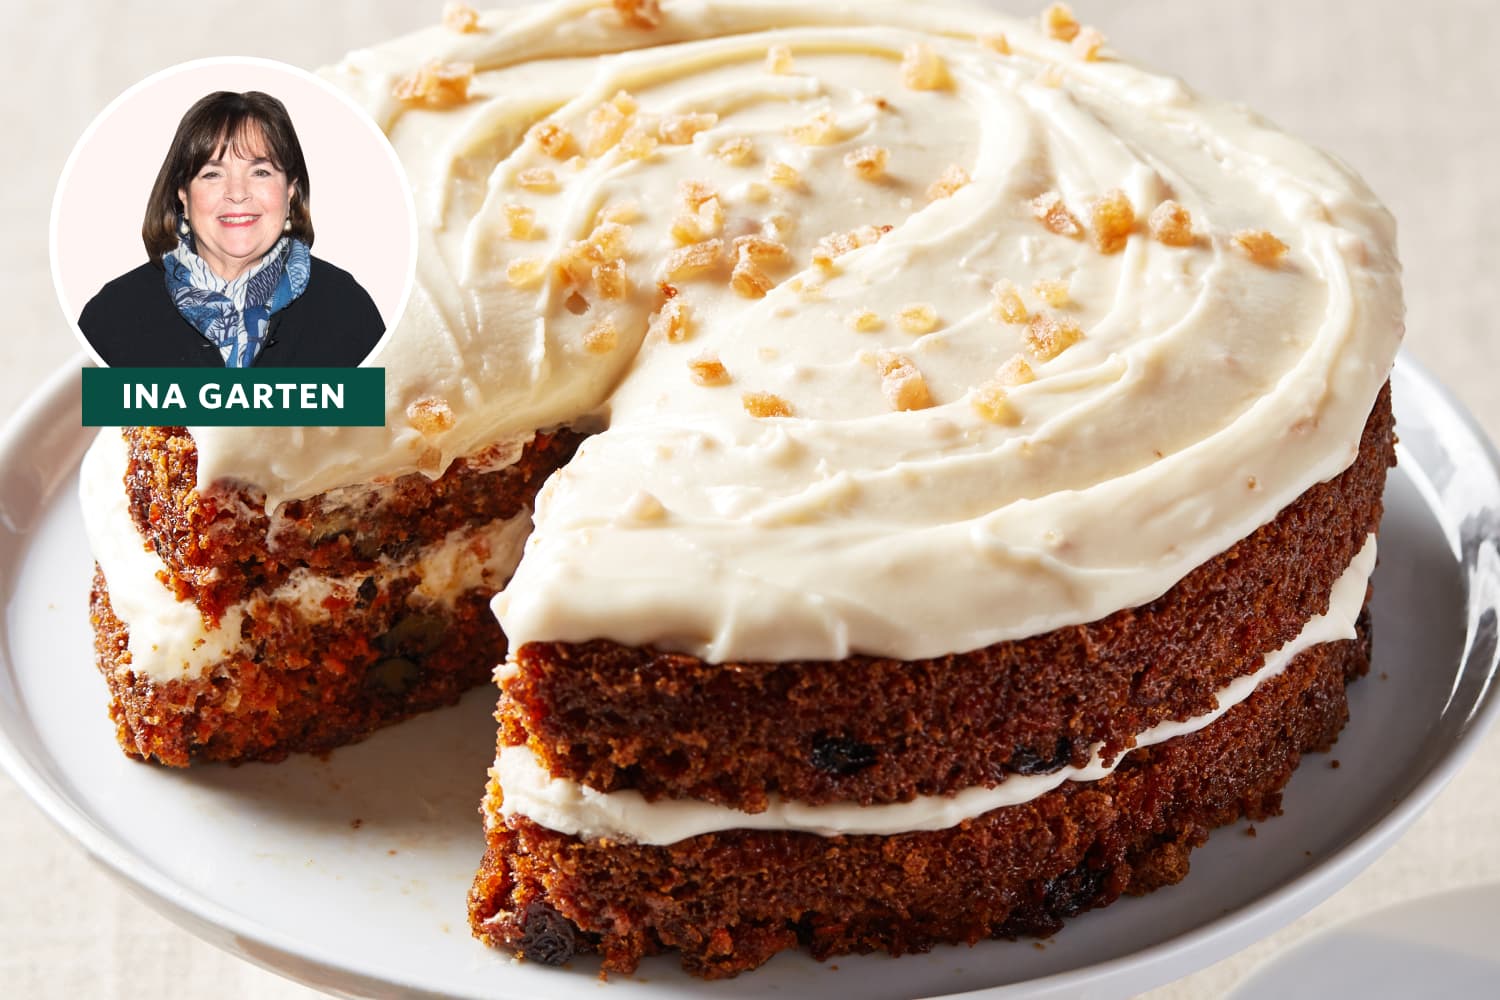 I Tried Ina Garten's Carrot Cake Recipe | Kitchn